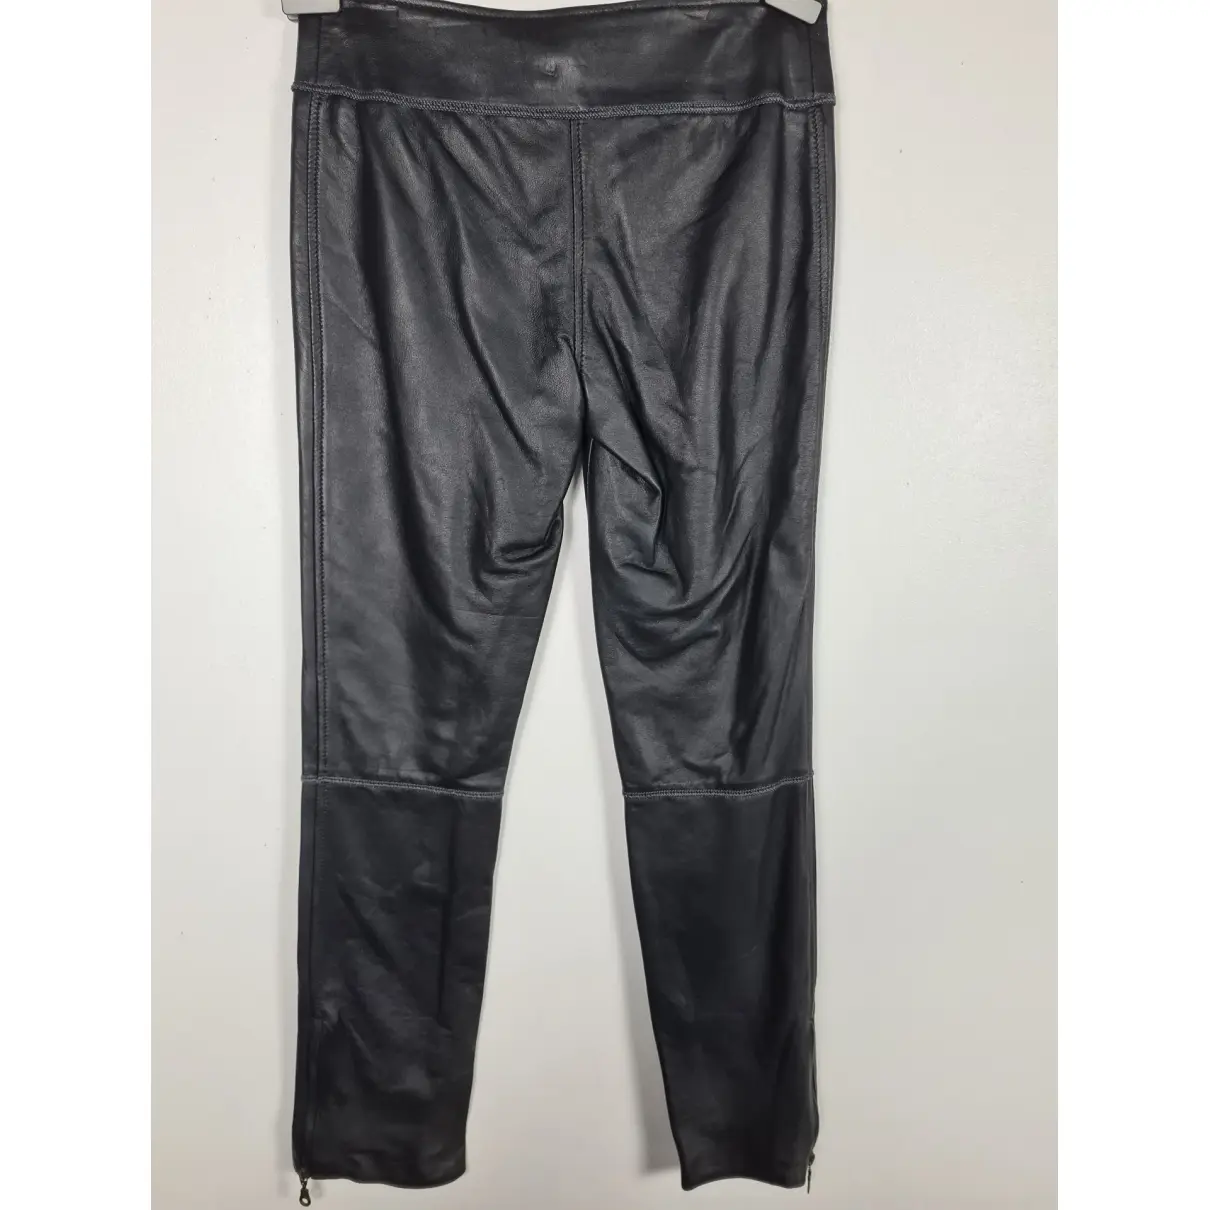 Buy Stills Atelier Leather slim pants online